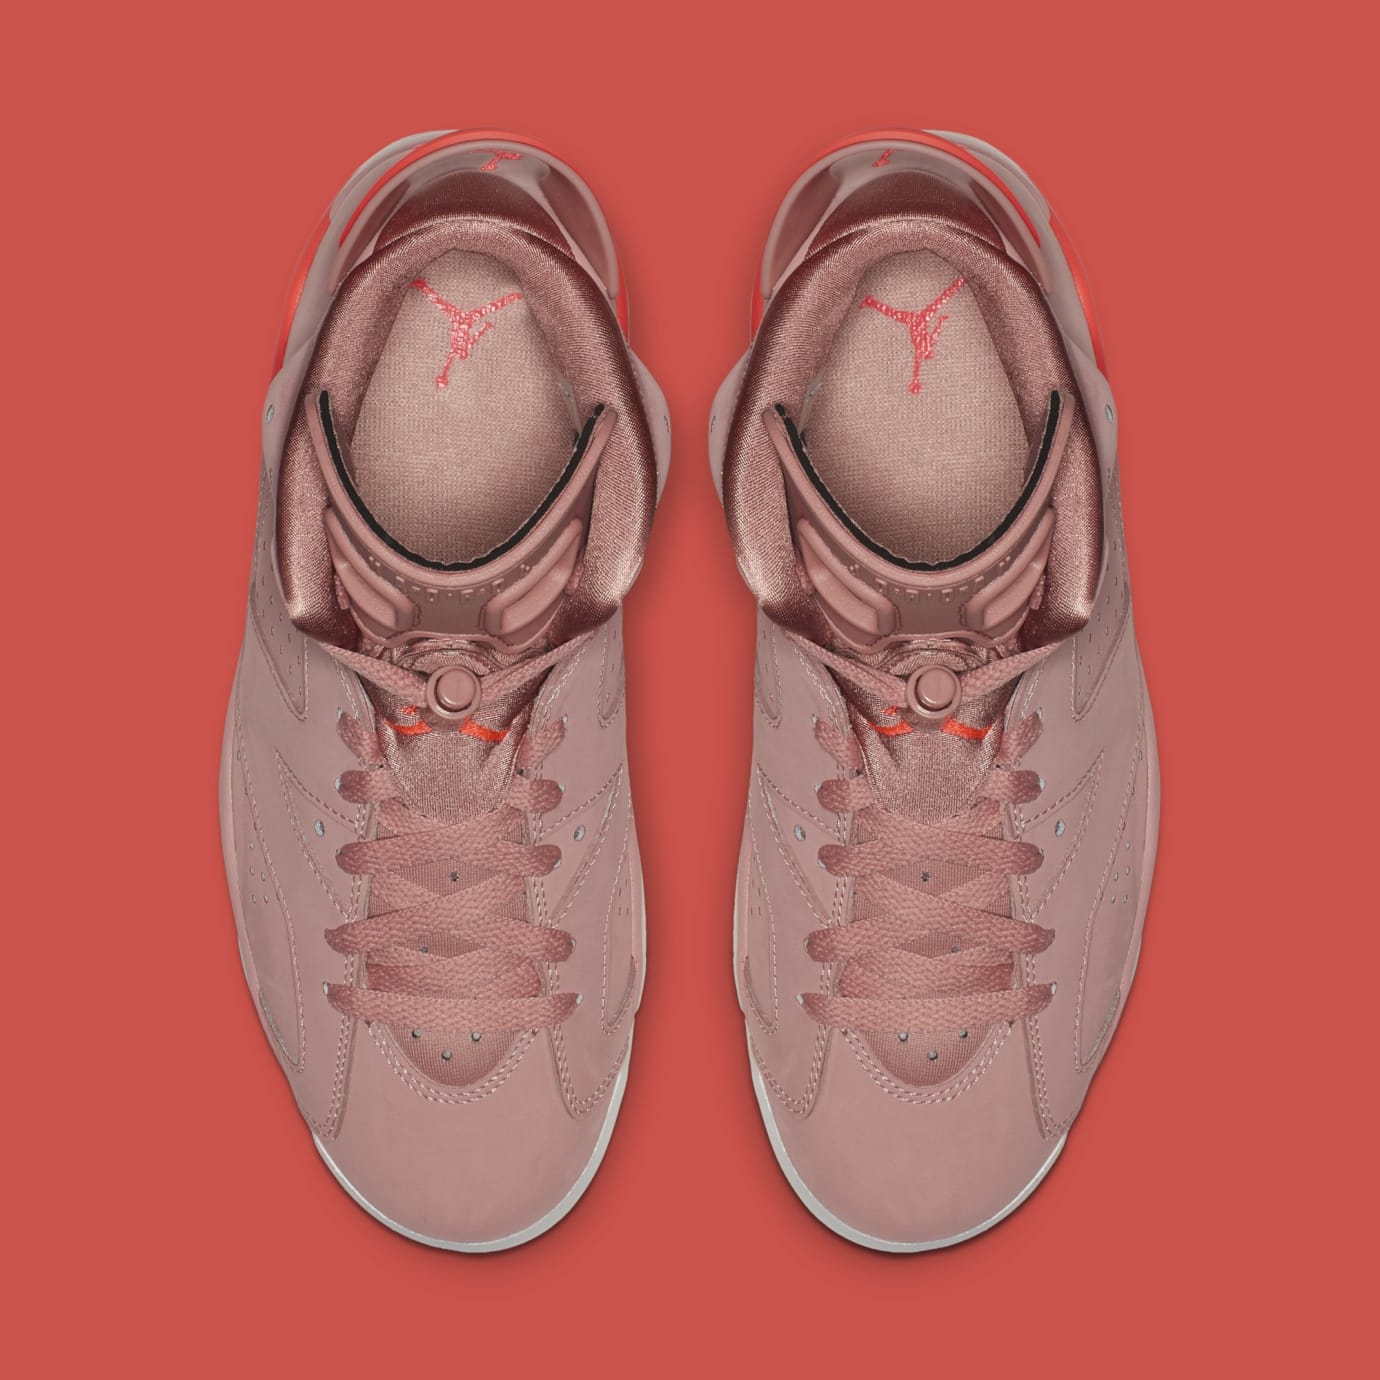 Aleali May x Air Jordan 6 'Rust Pink/Bright Crimson' CI0550-600 (Top)